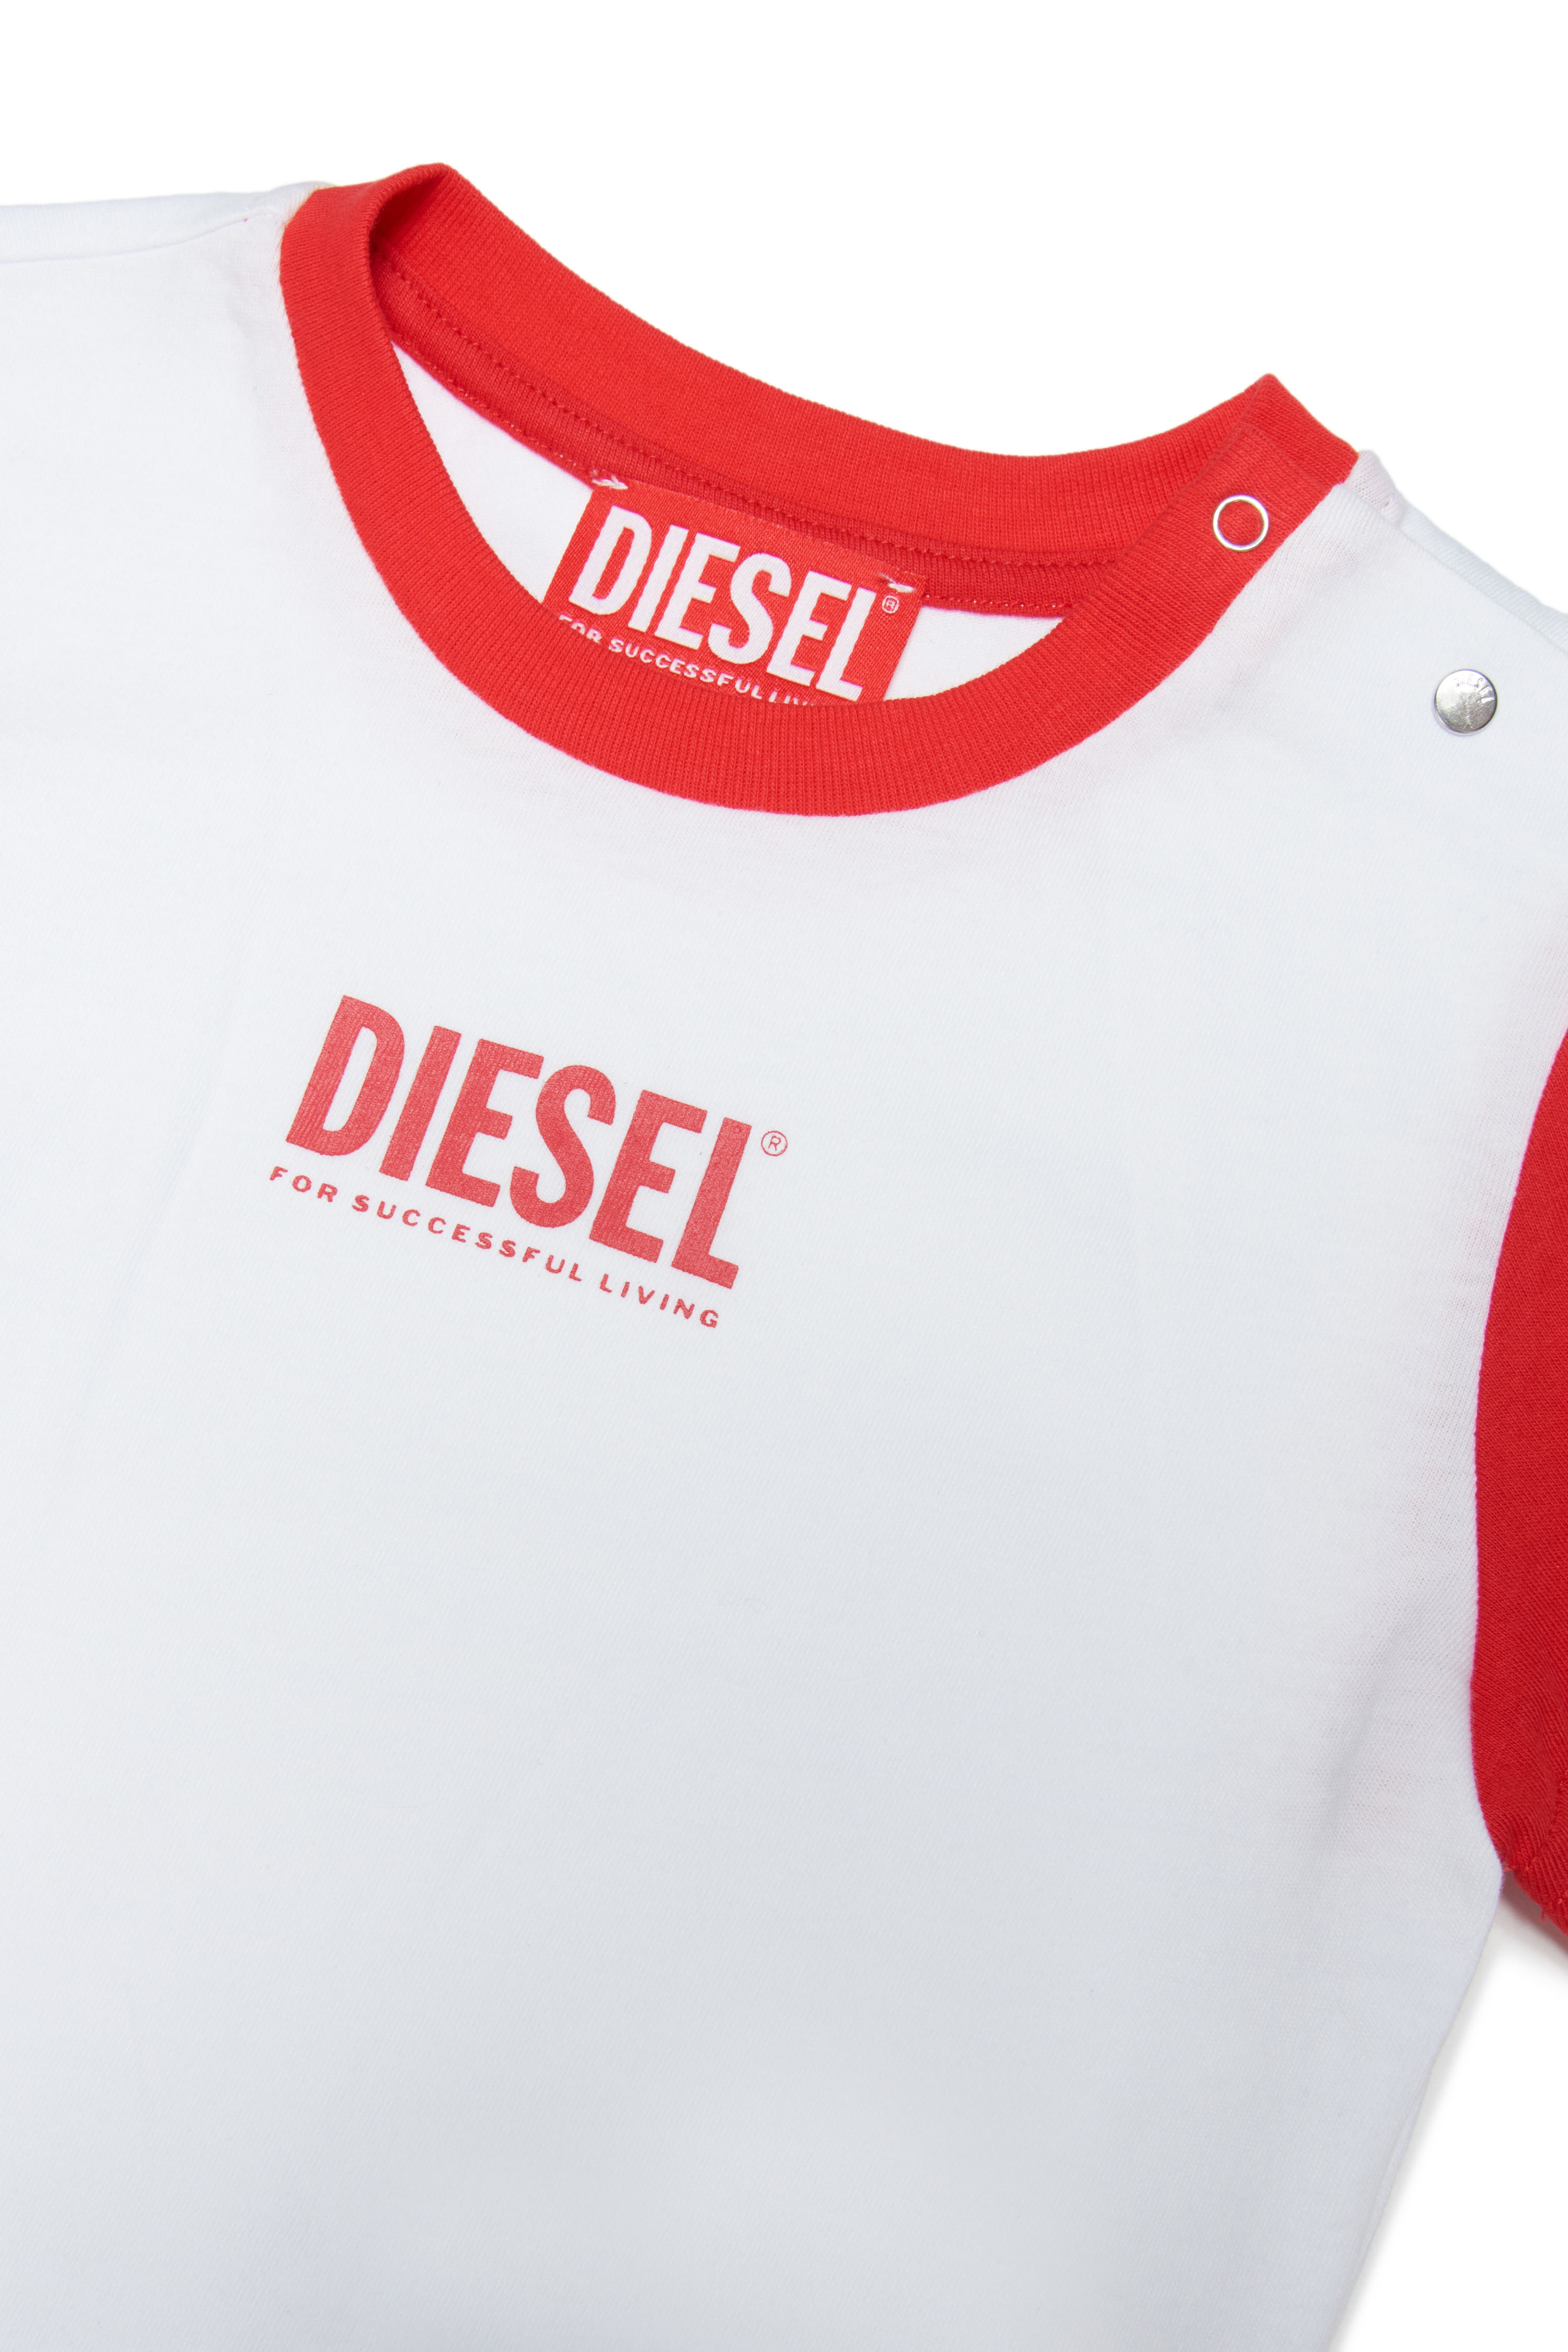 Diesel - MTANTEB, Blanc/Rouge - Image 3